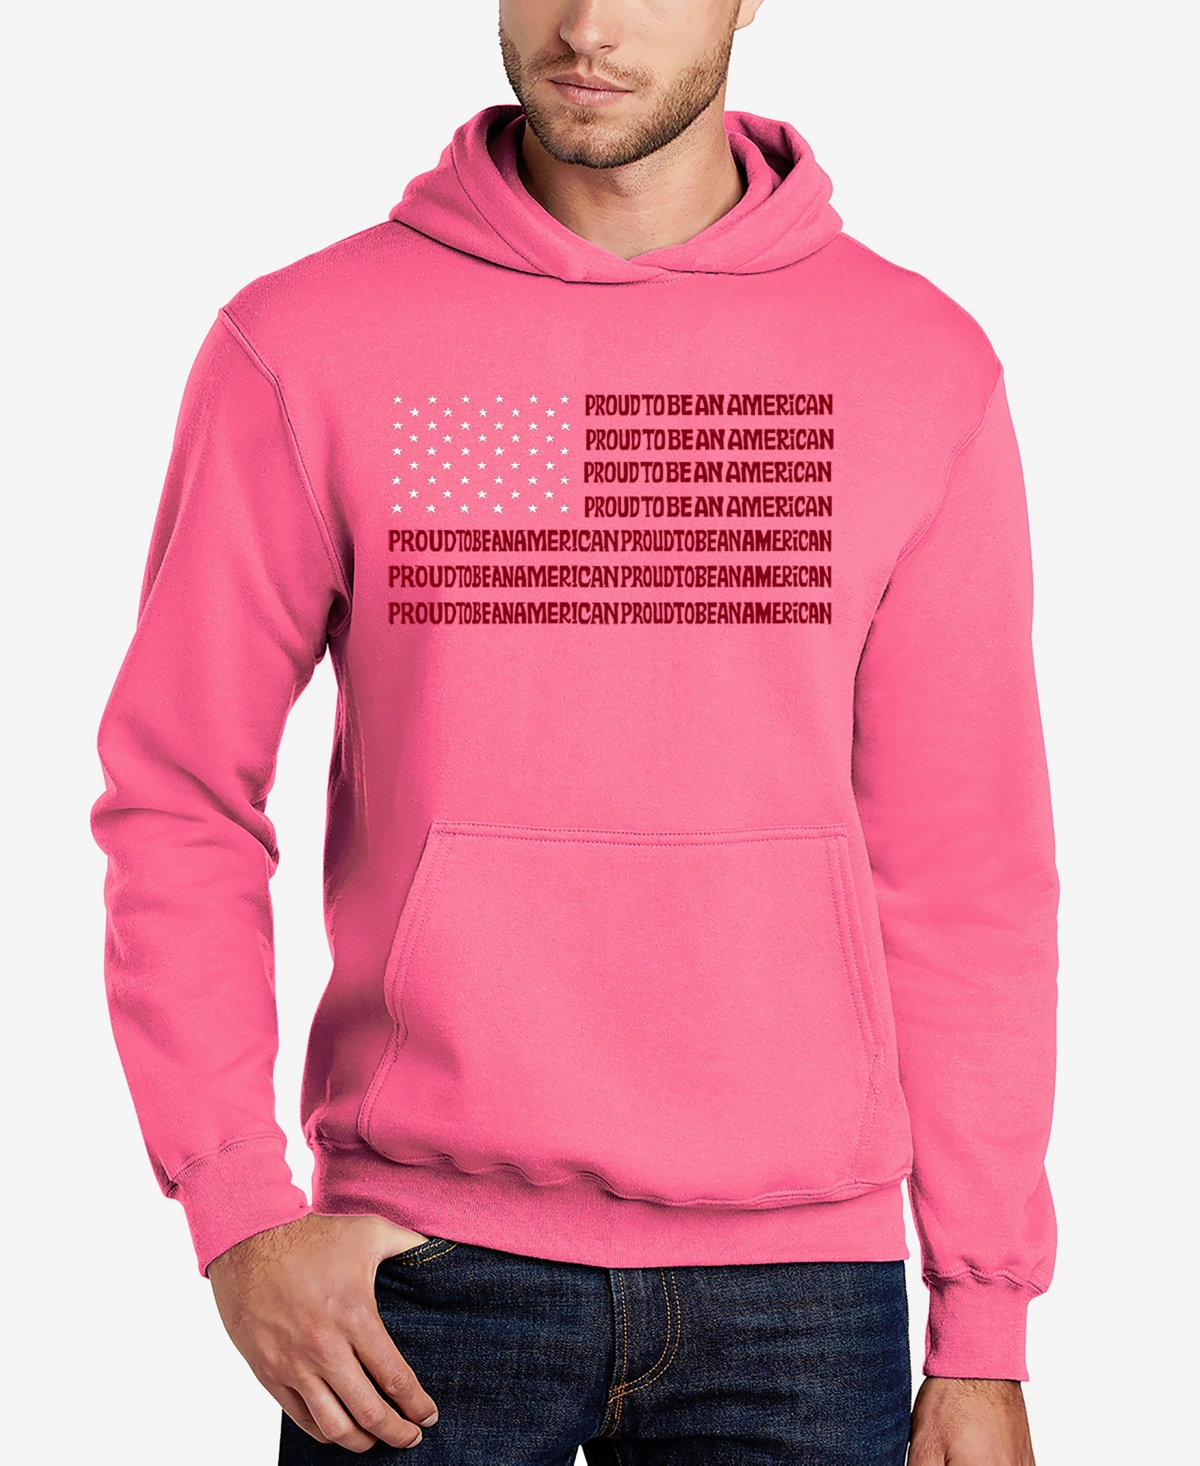 Proud To Be An American - Men's Word Art Hooded Sweatshirt - Pink